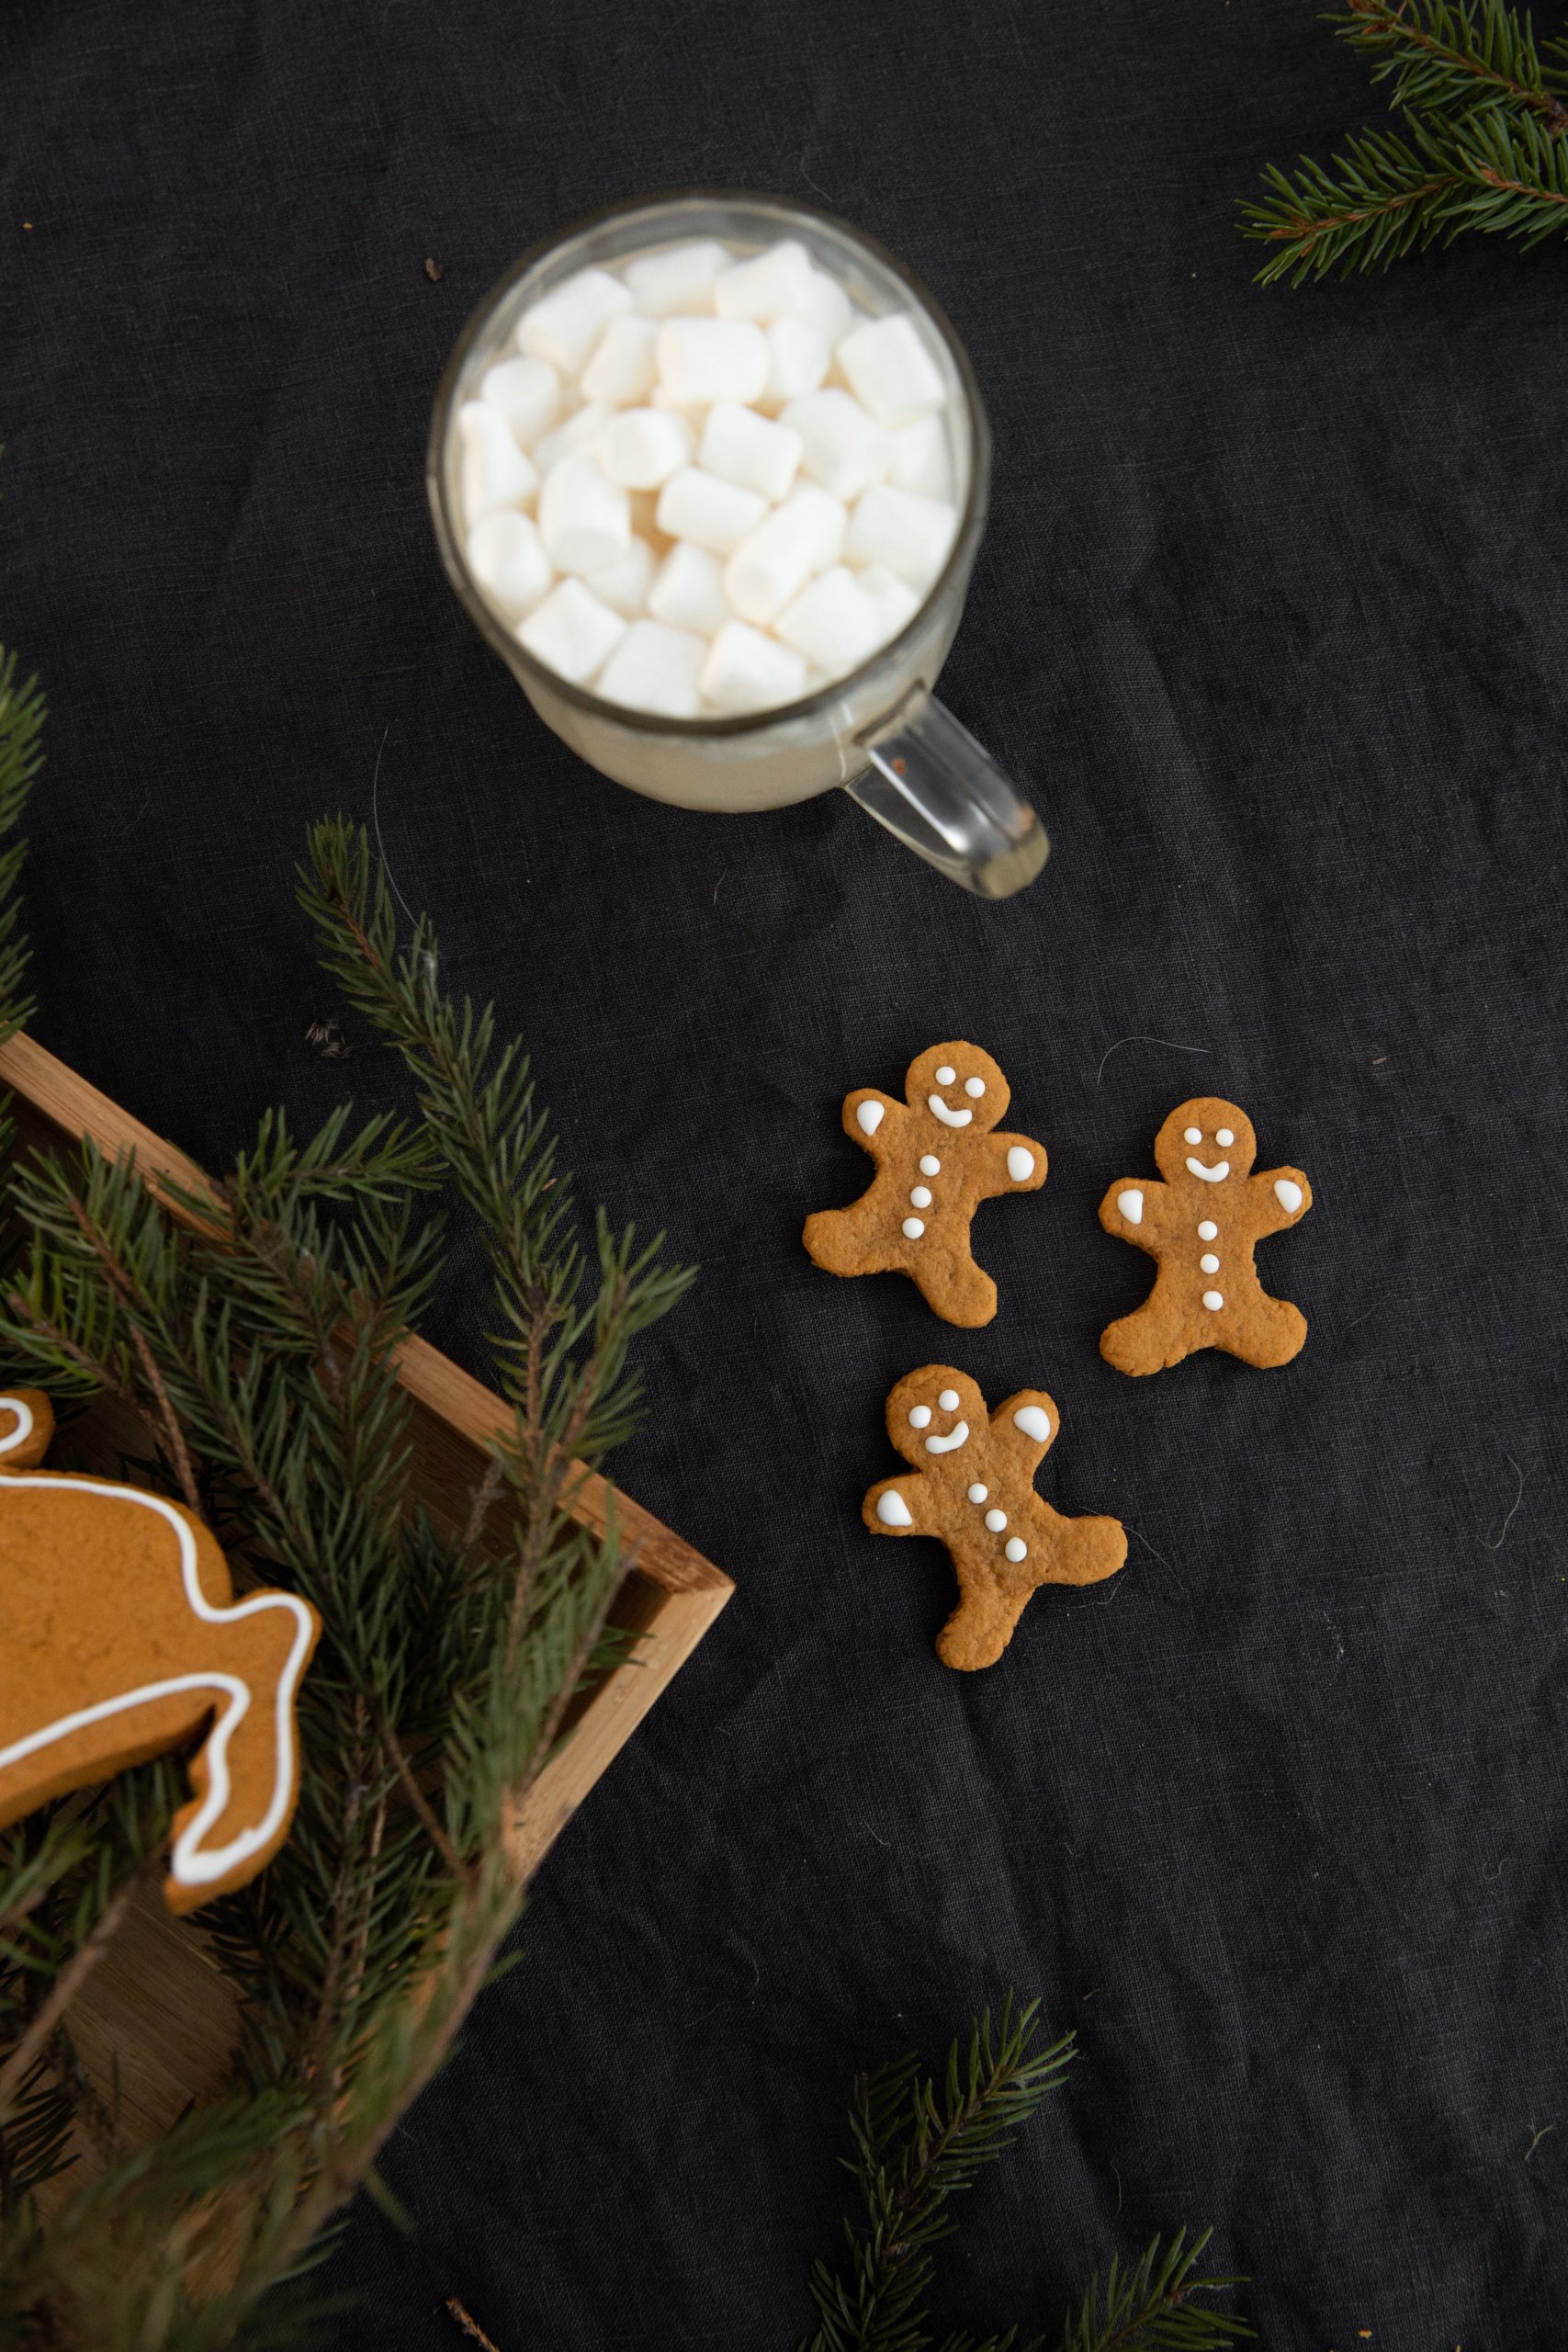 pexels image credit to ekaterina bolovtsova. image of mug of marshmallows and three gingerbread cookies on black background